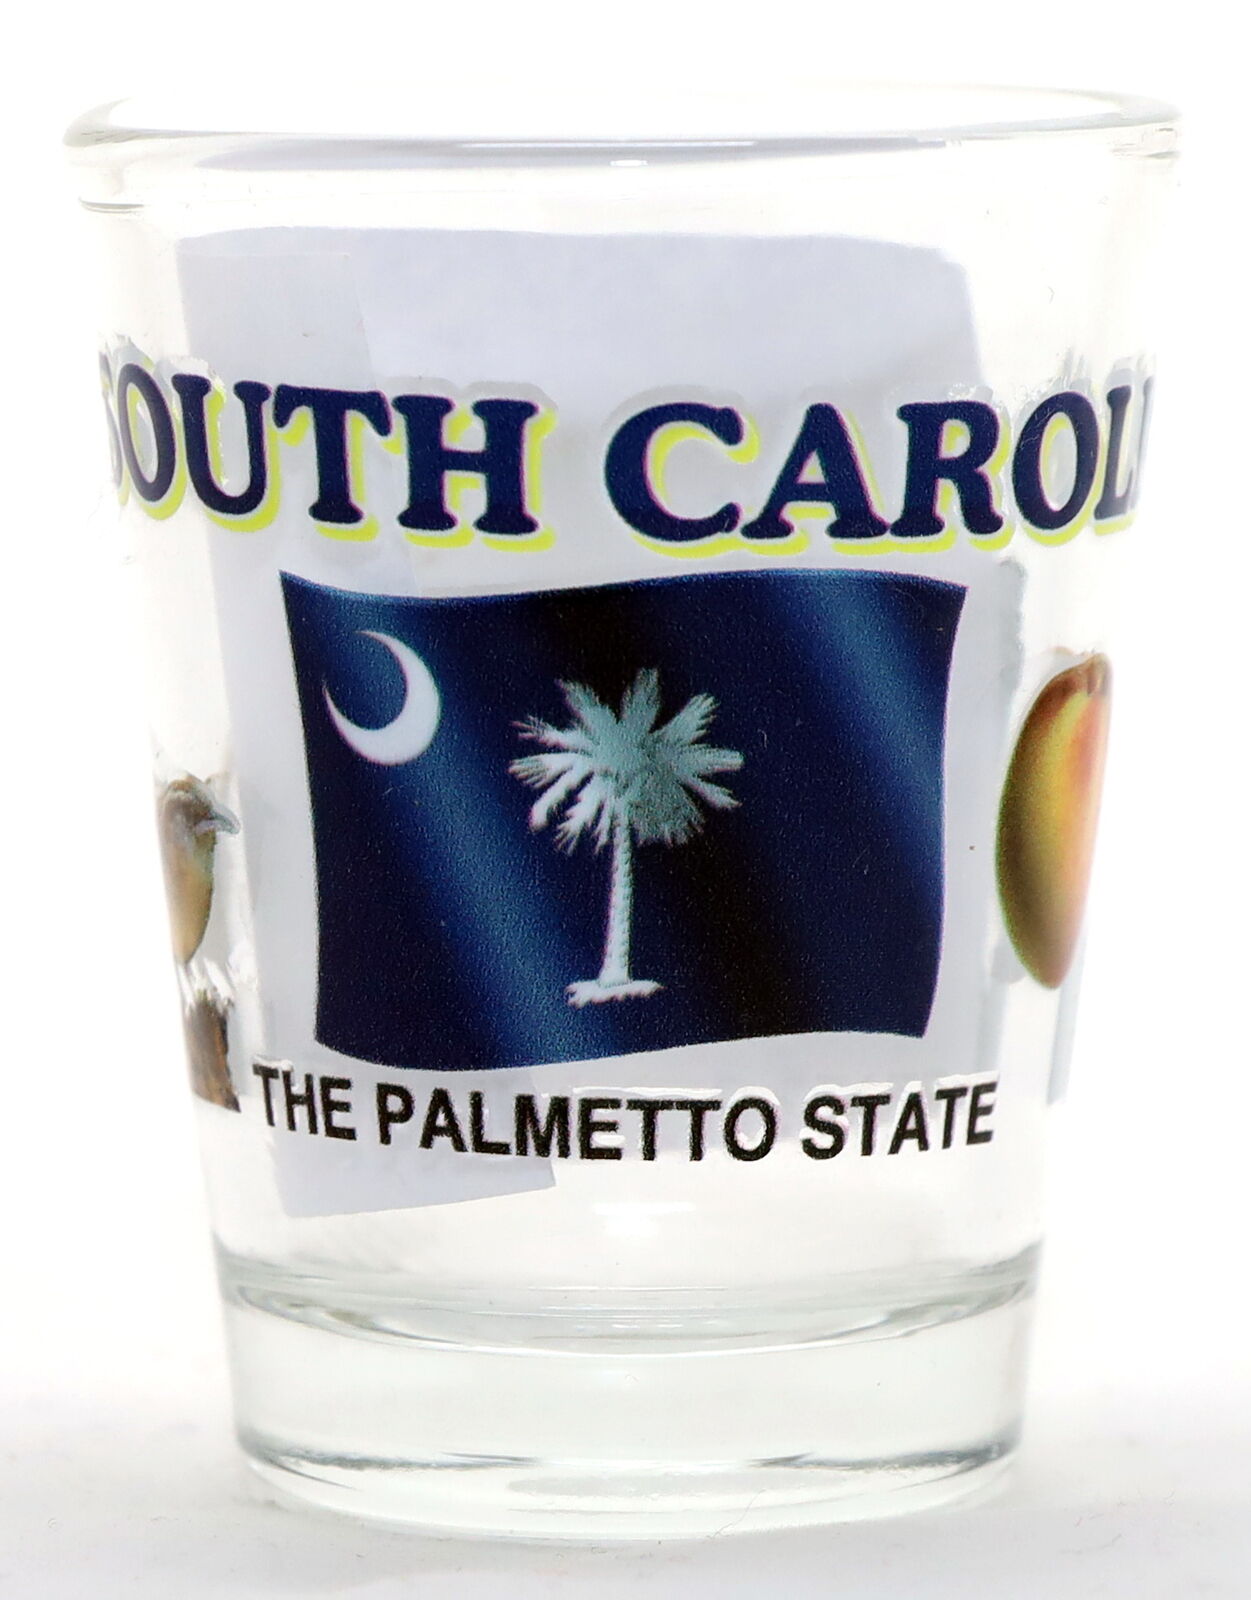 SOUTH CAROLINA THE PALMETTO STATE ALL-AMERICAN COLLECTION SHOT GLASS SHOTGLASS